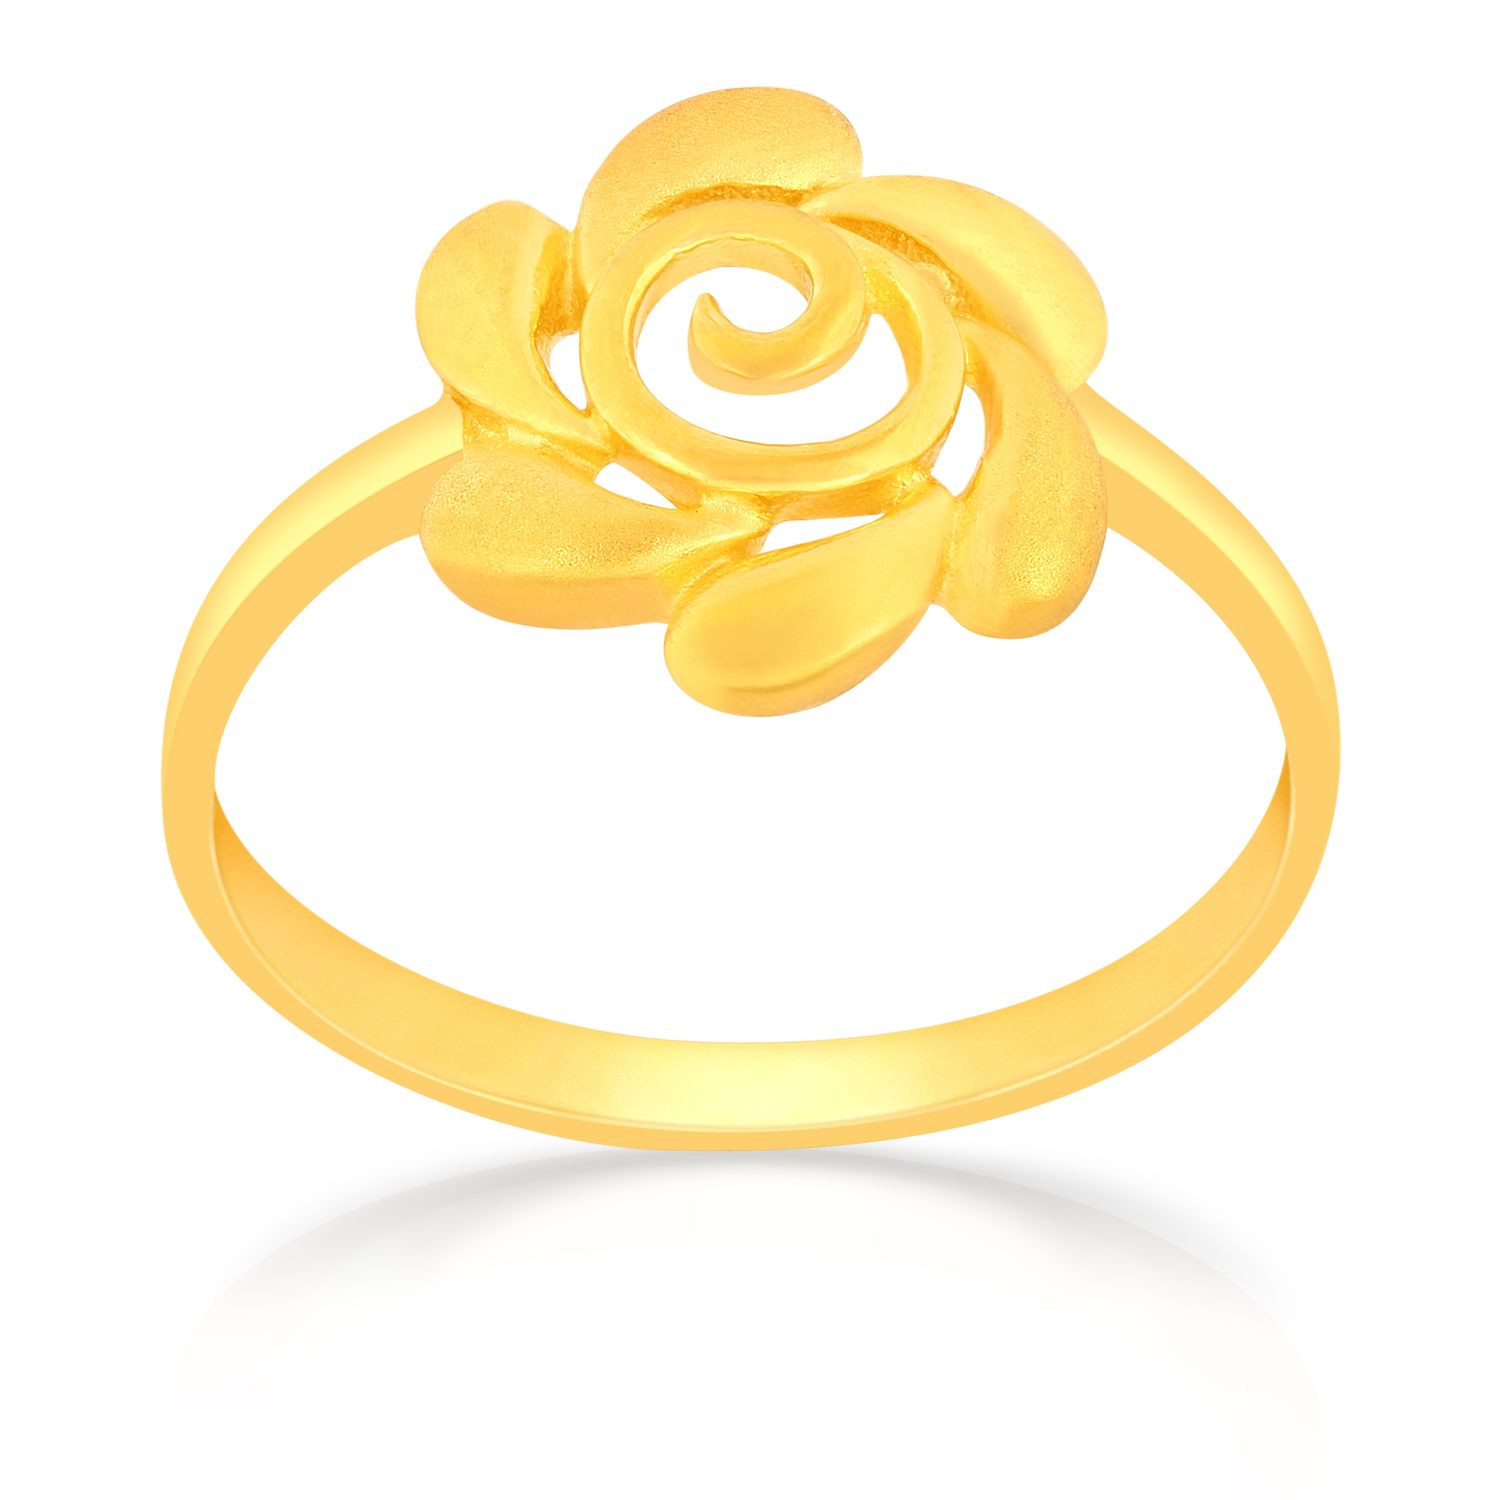 Malabar 22 KT Gold Studded Casual Ring SKYFRDZ038